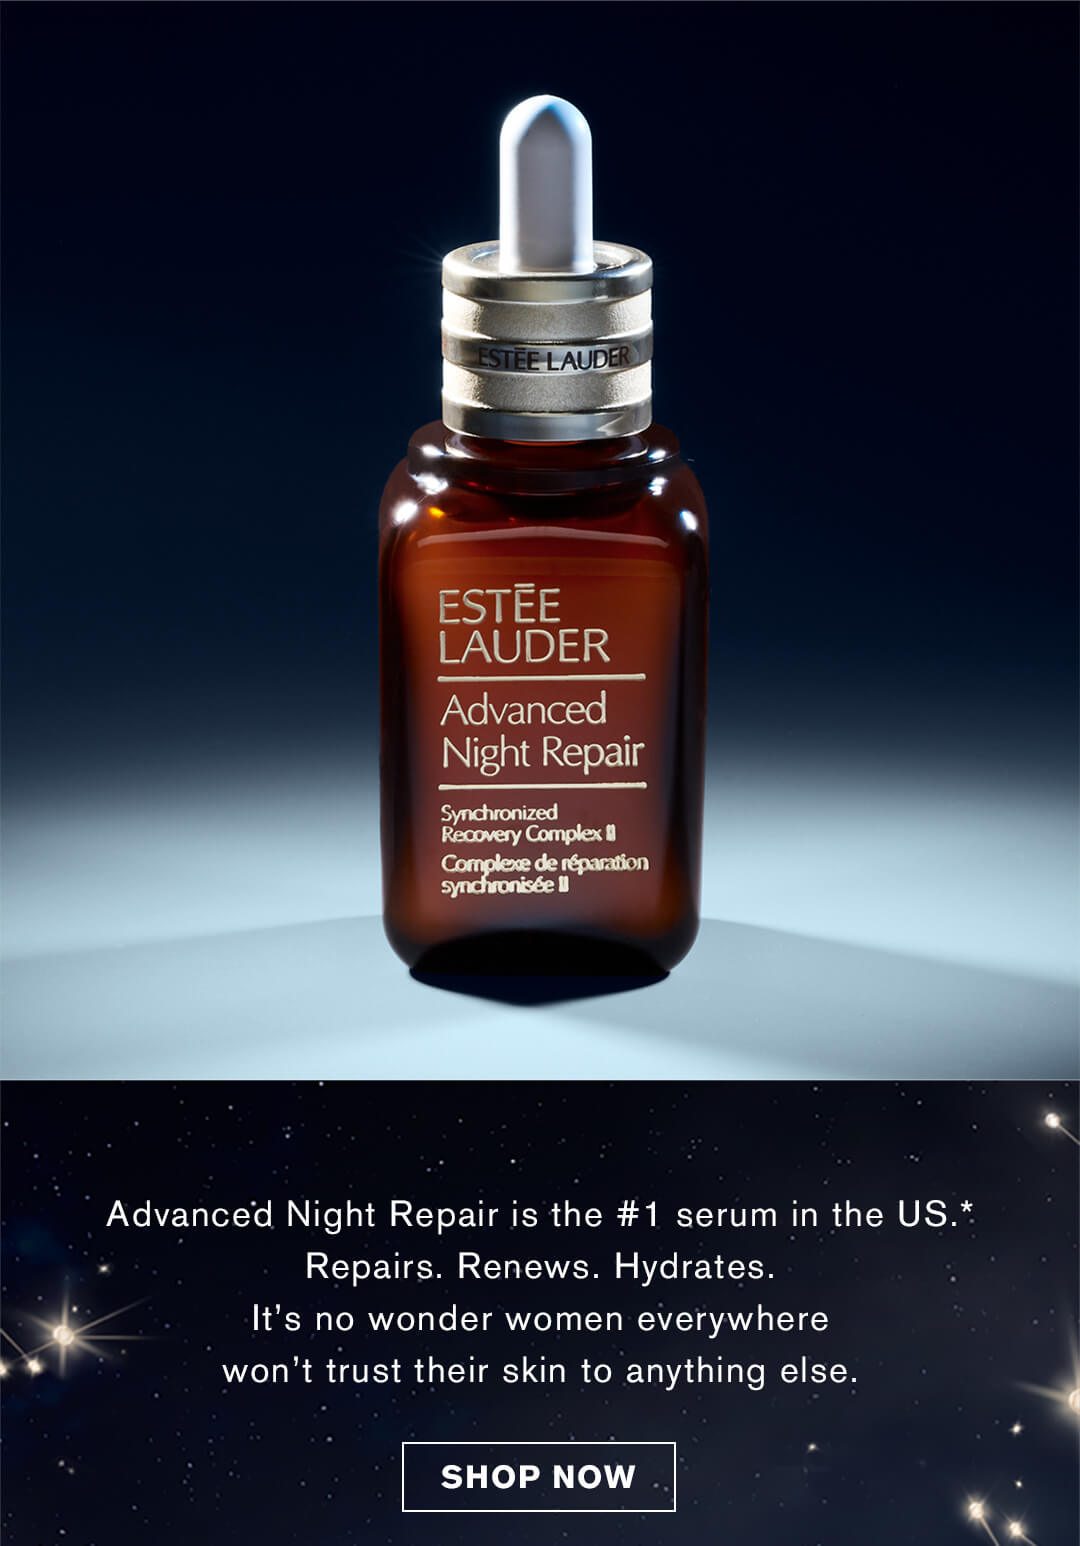 Advanced Night Repair is #1 serum in the US.